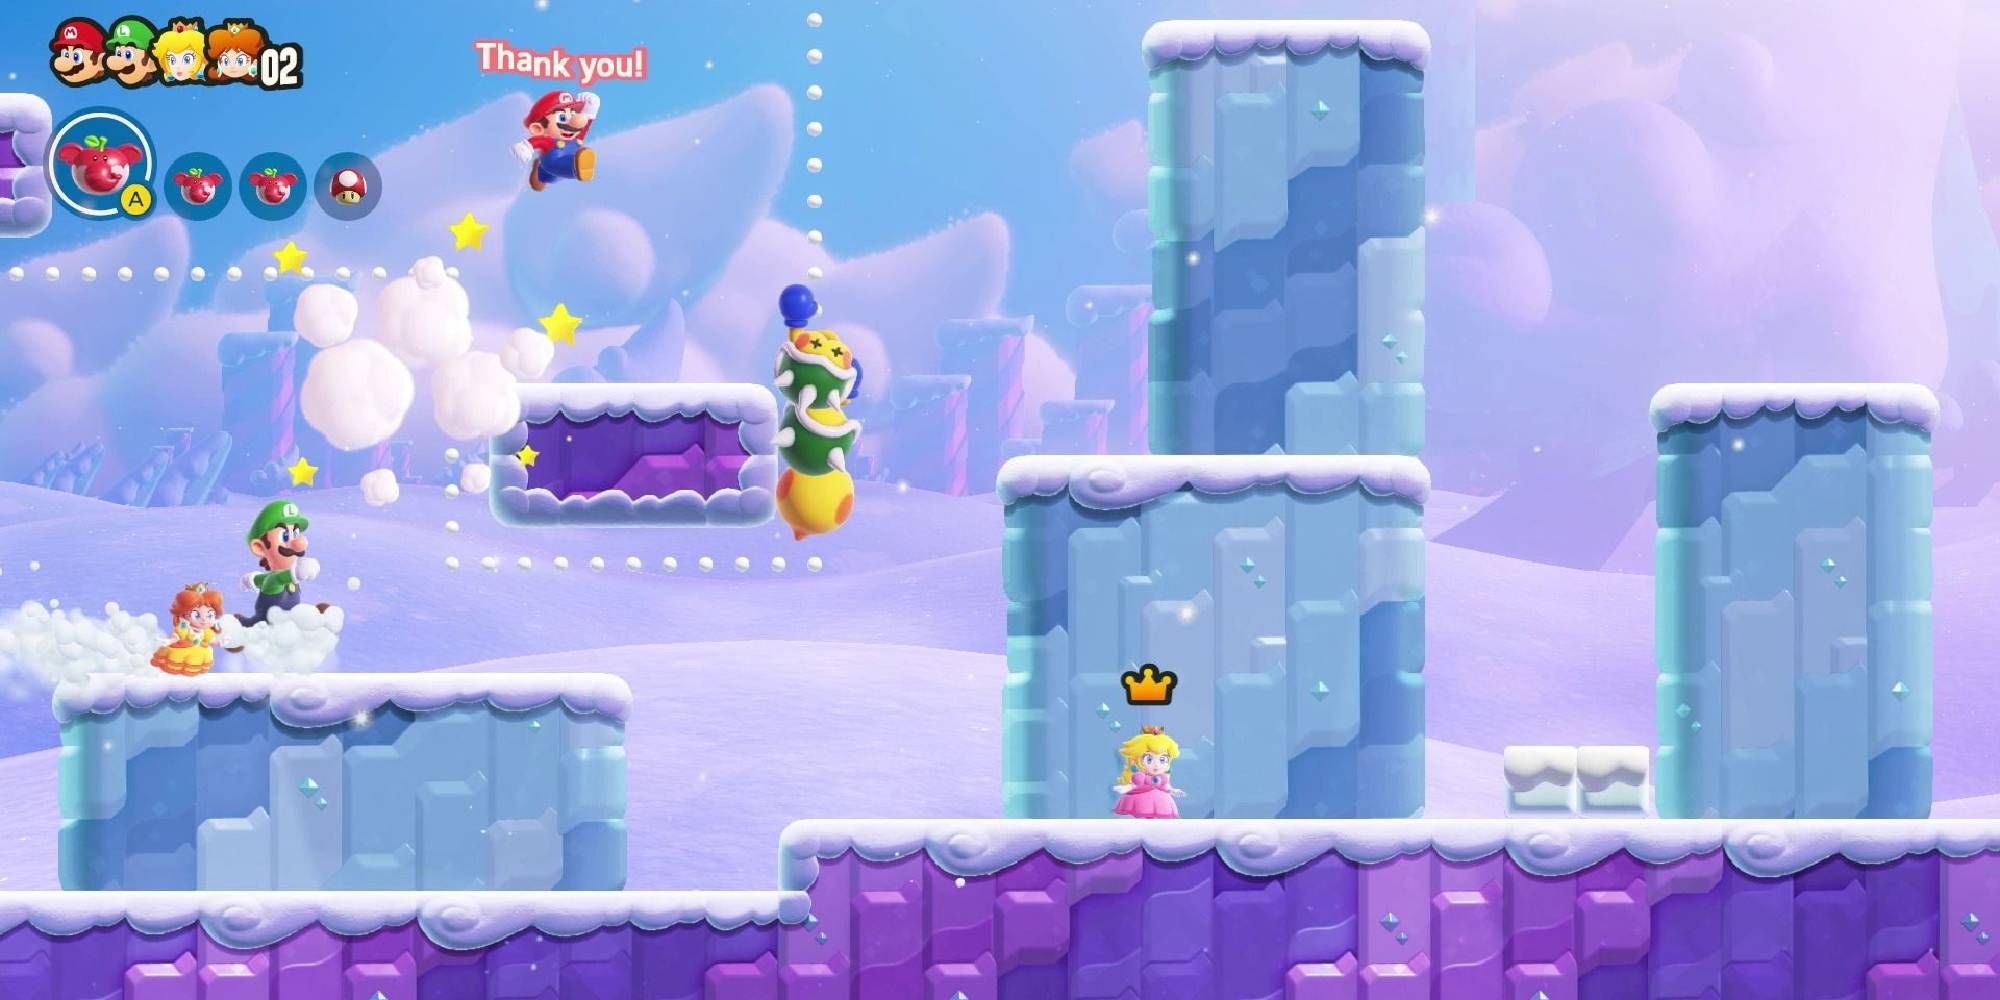 Evolution of Princess Daisy in Super Mario Sports Games (2000